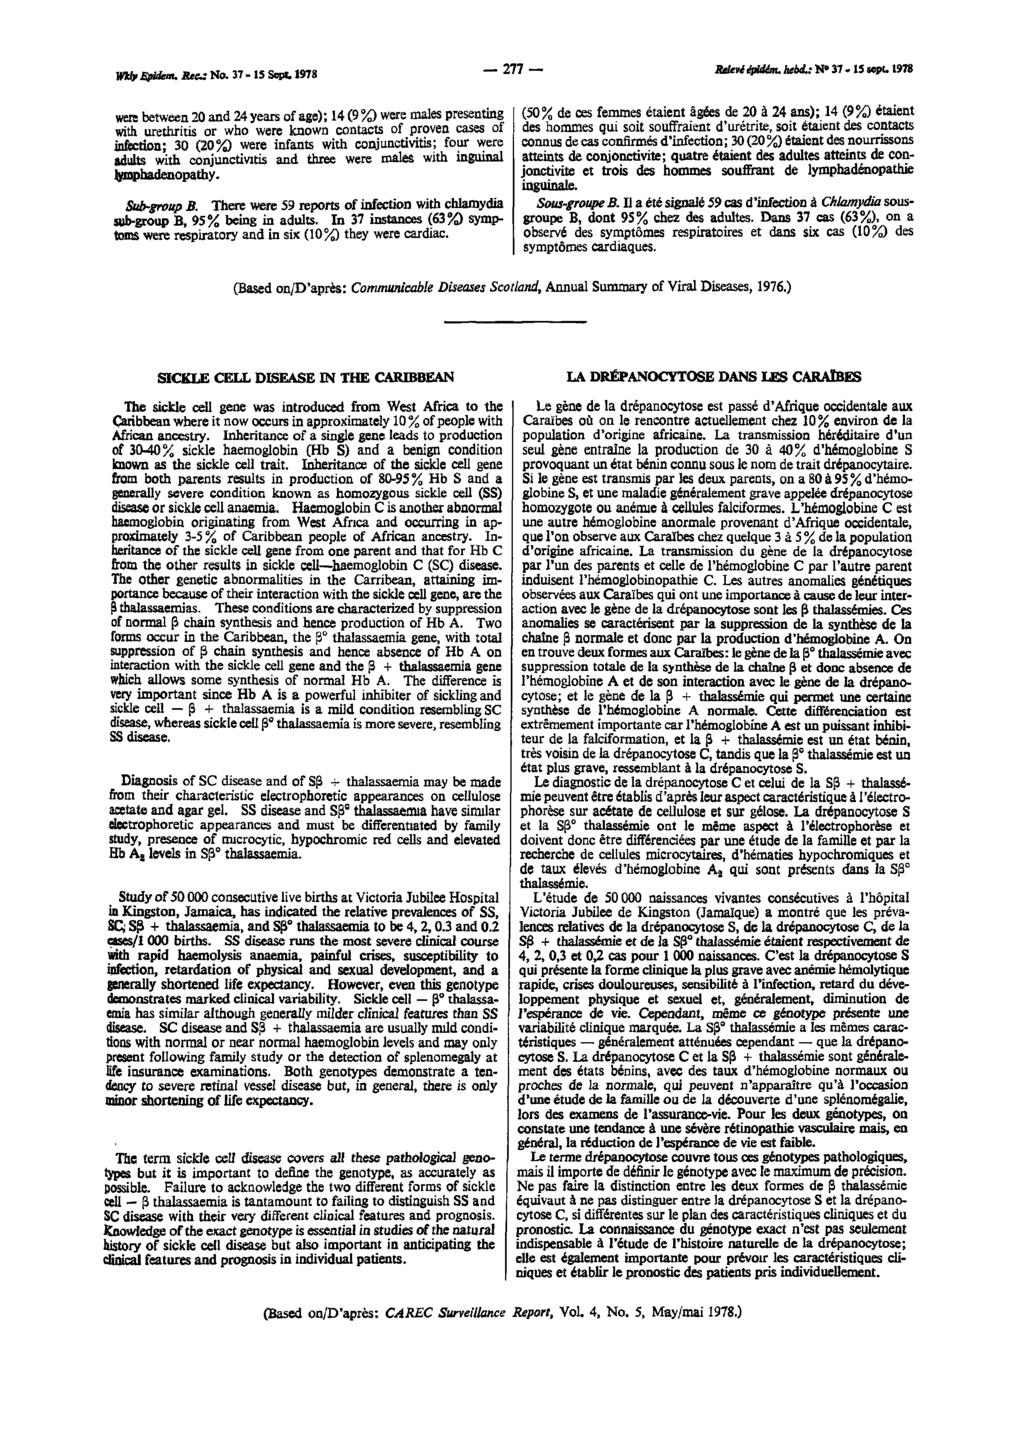 Wkly Epidenu TSeci N o. 37-1S Sept. 1978 277 Relevé épidénu heb<l: N 37 * IS sept.